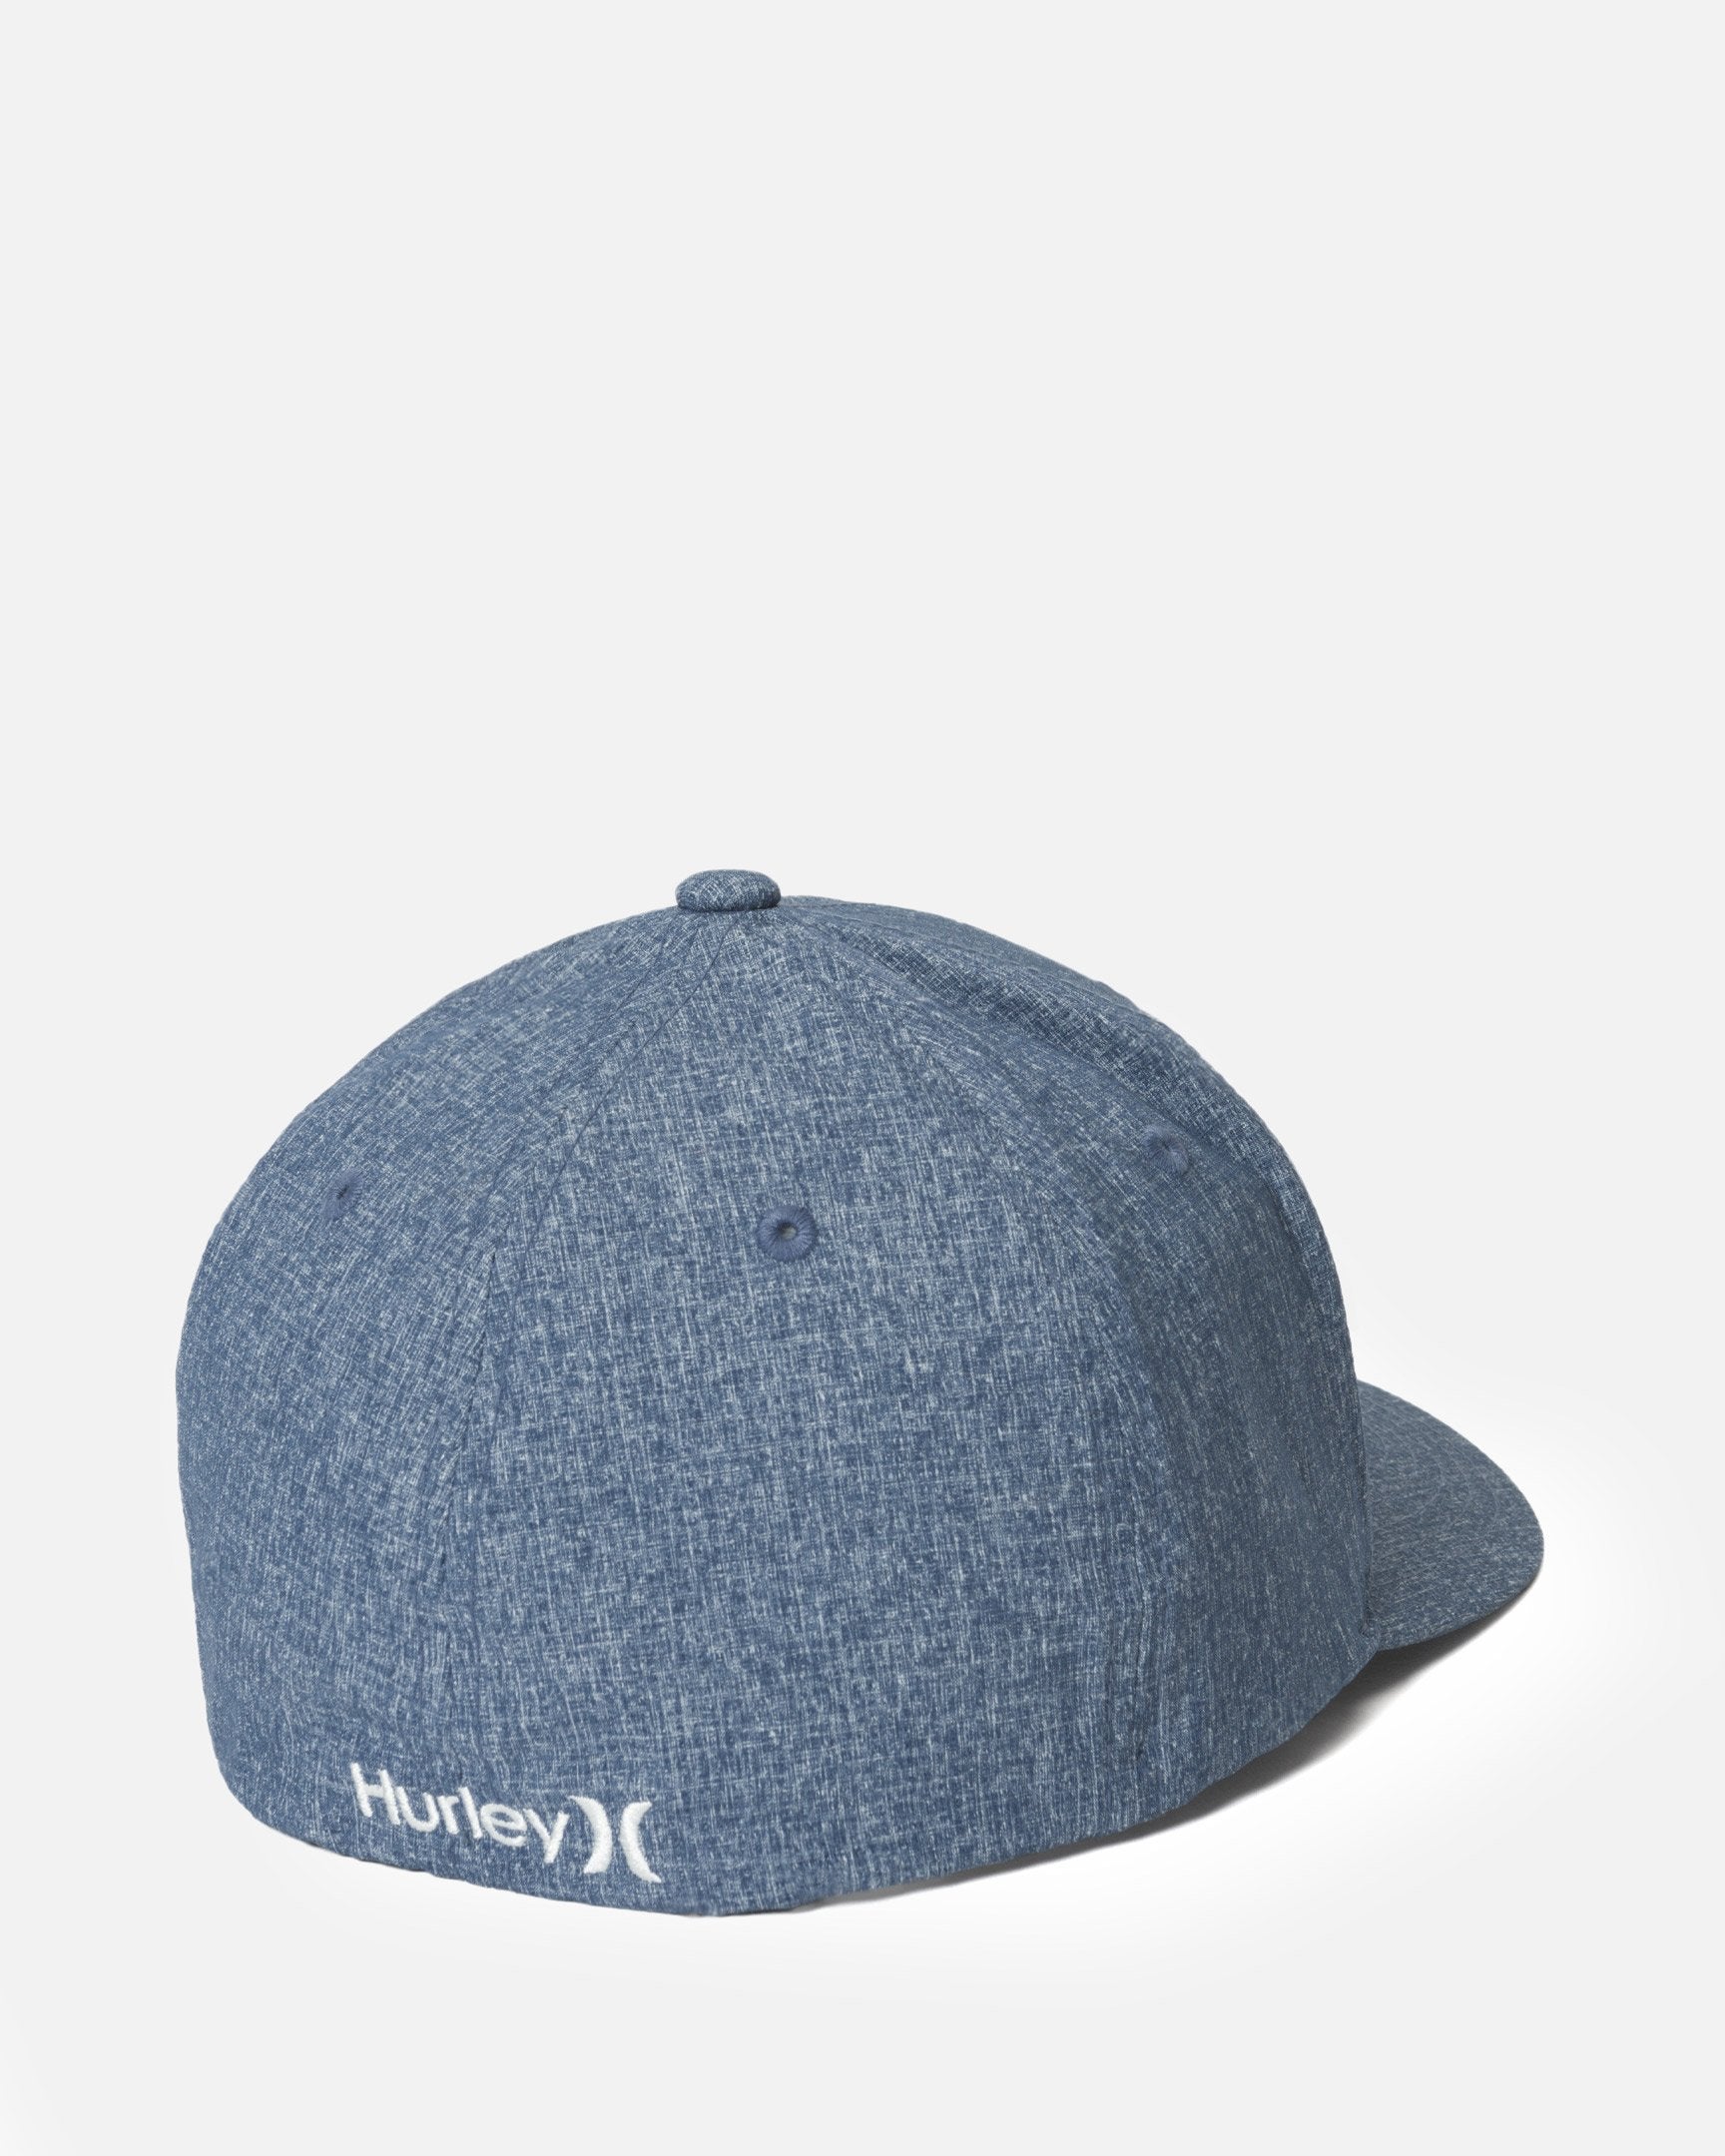 Coastal Blue - Phantom Resist Hat | Hurley